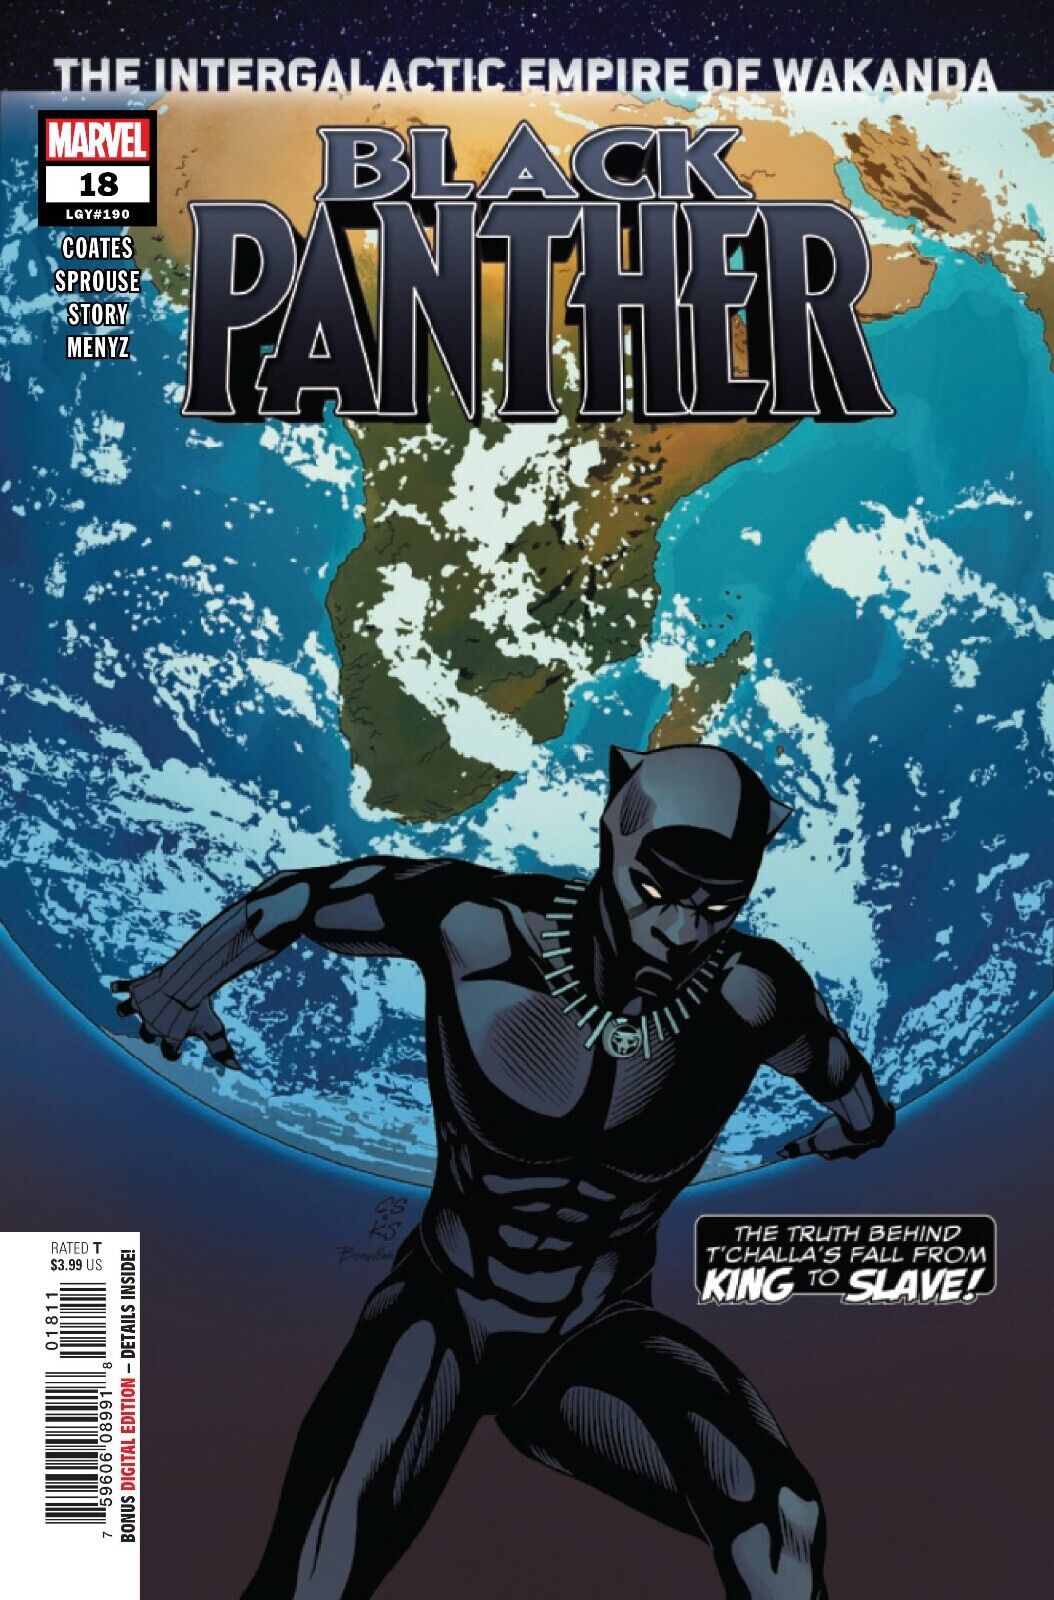 Black Panther 2020 #18 THE INTERGALACTIC EMPIRE OF WAKANDA - TWO THOUSAND SEASON